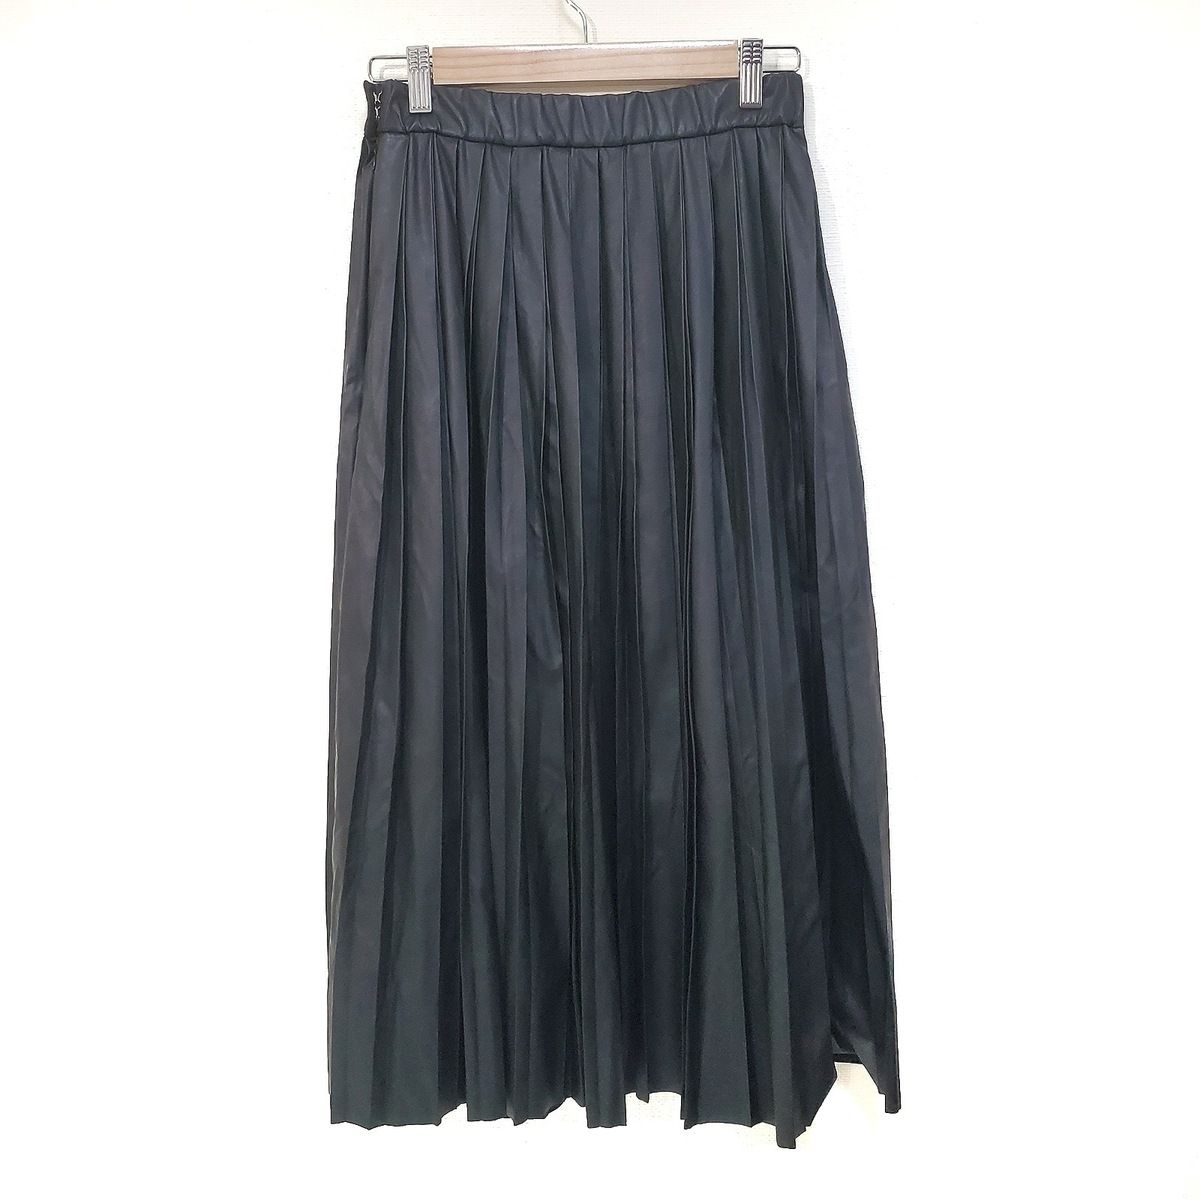 EPOCA(エポカ) ロングスカート サイズ40 M レディース美品 - 黒 マキシ